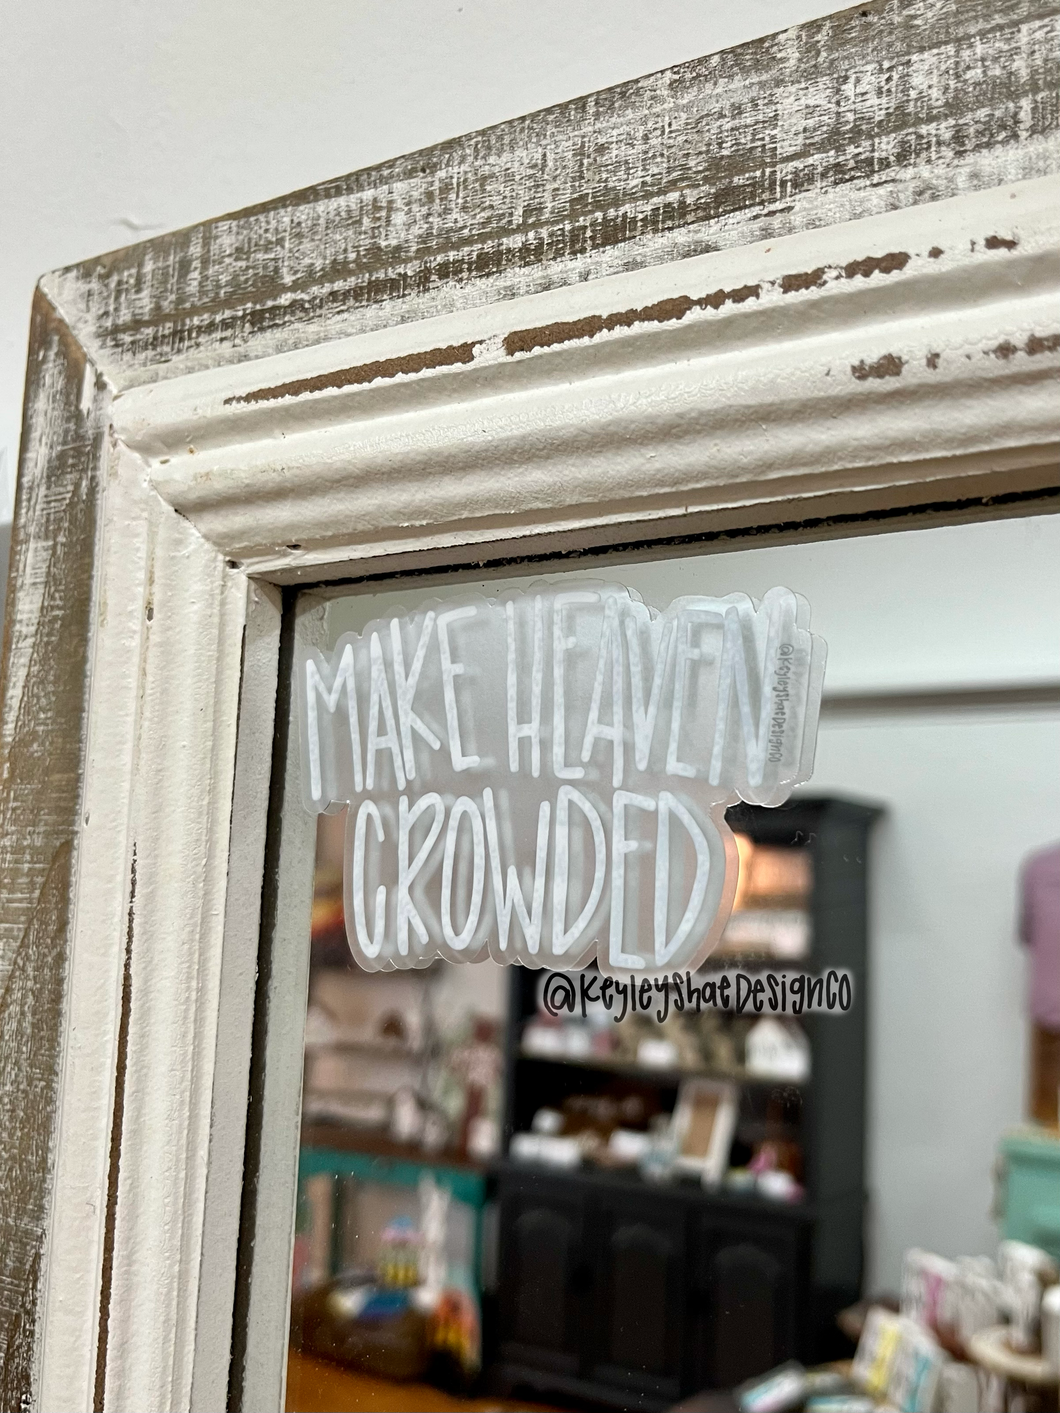 Make Heaven Crowded Clear Backing Sticker